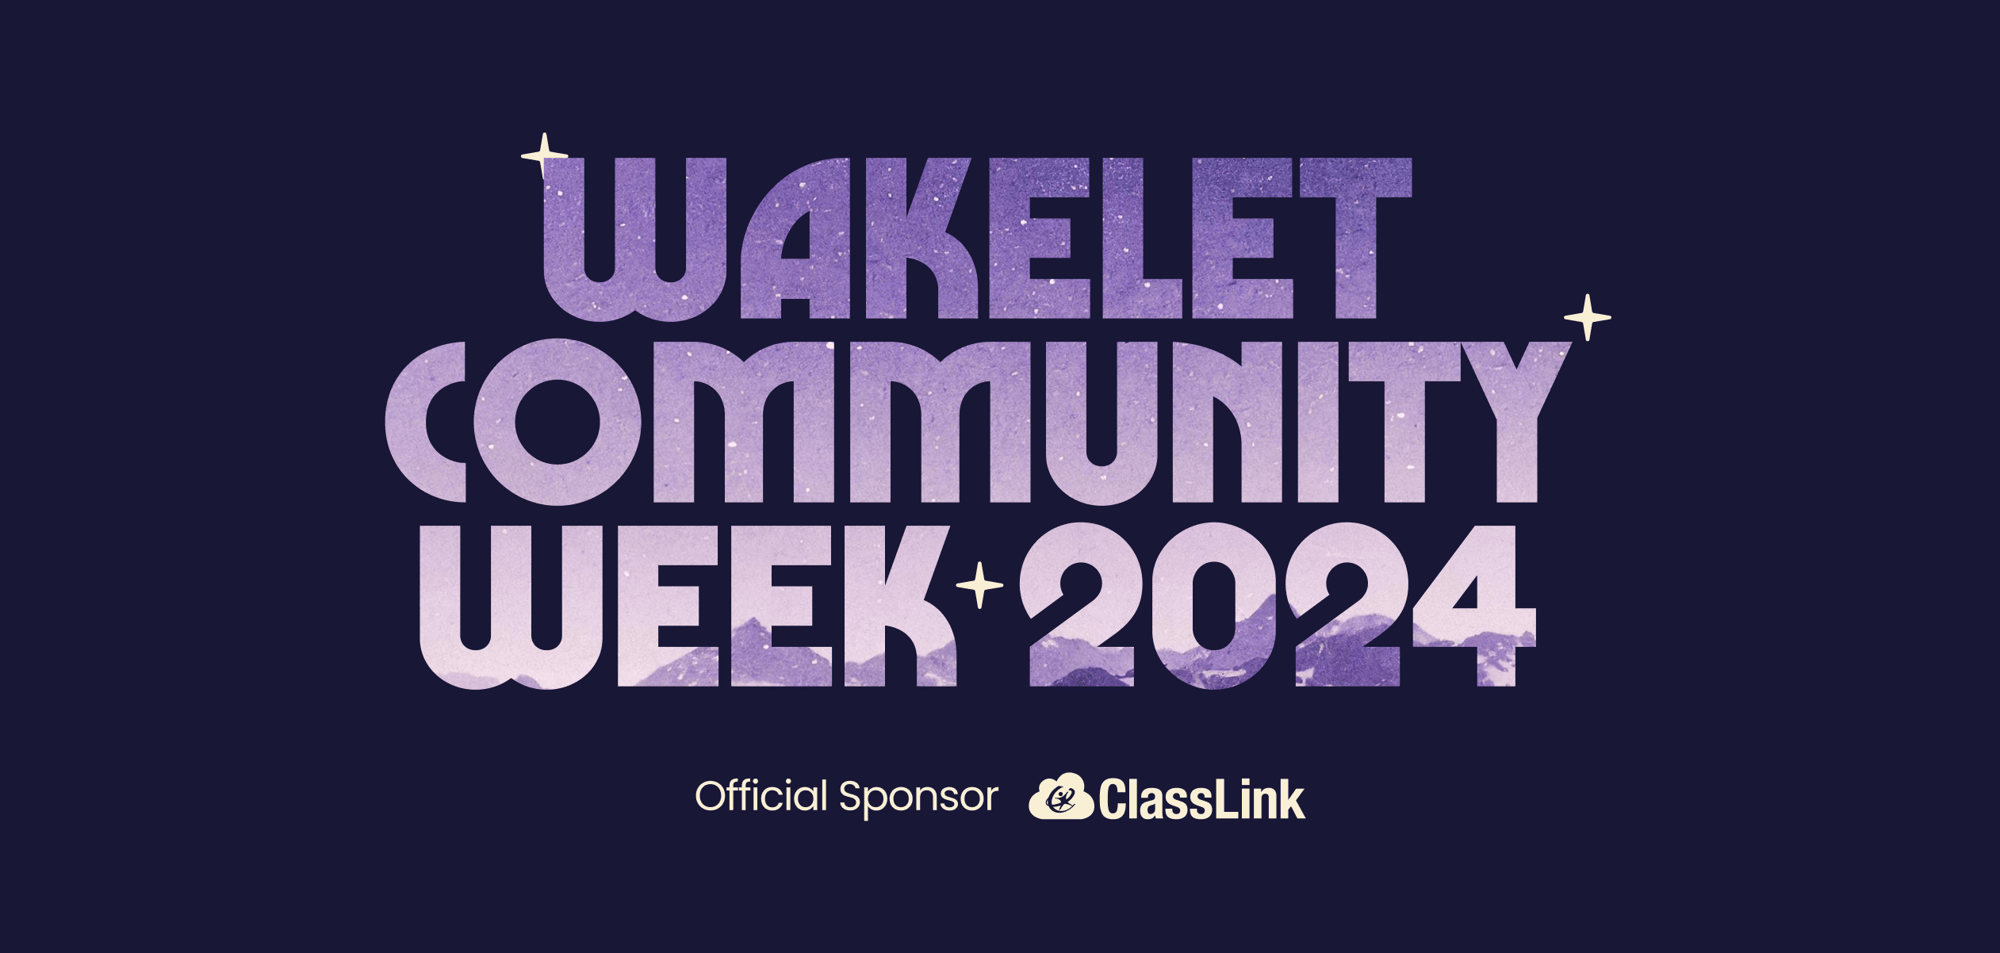 Wakelet Community Week 2024 - official sponsor Classlink